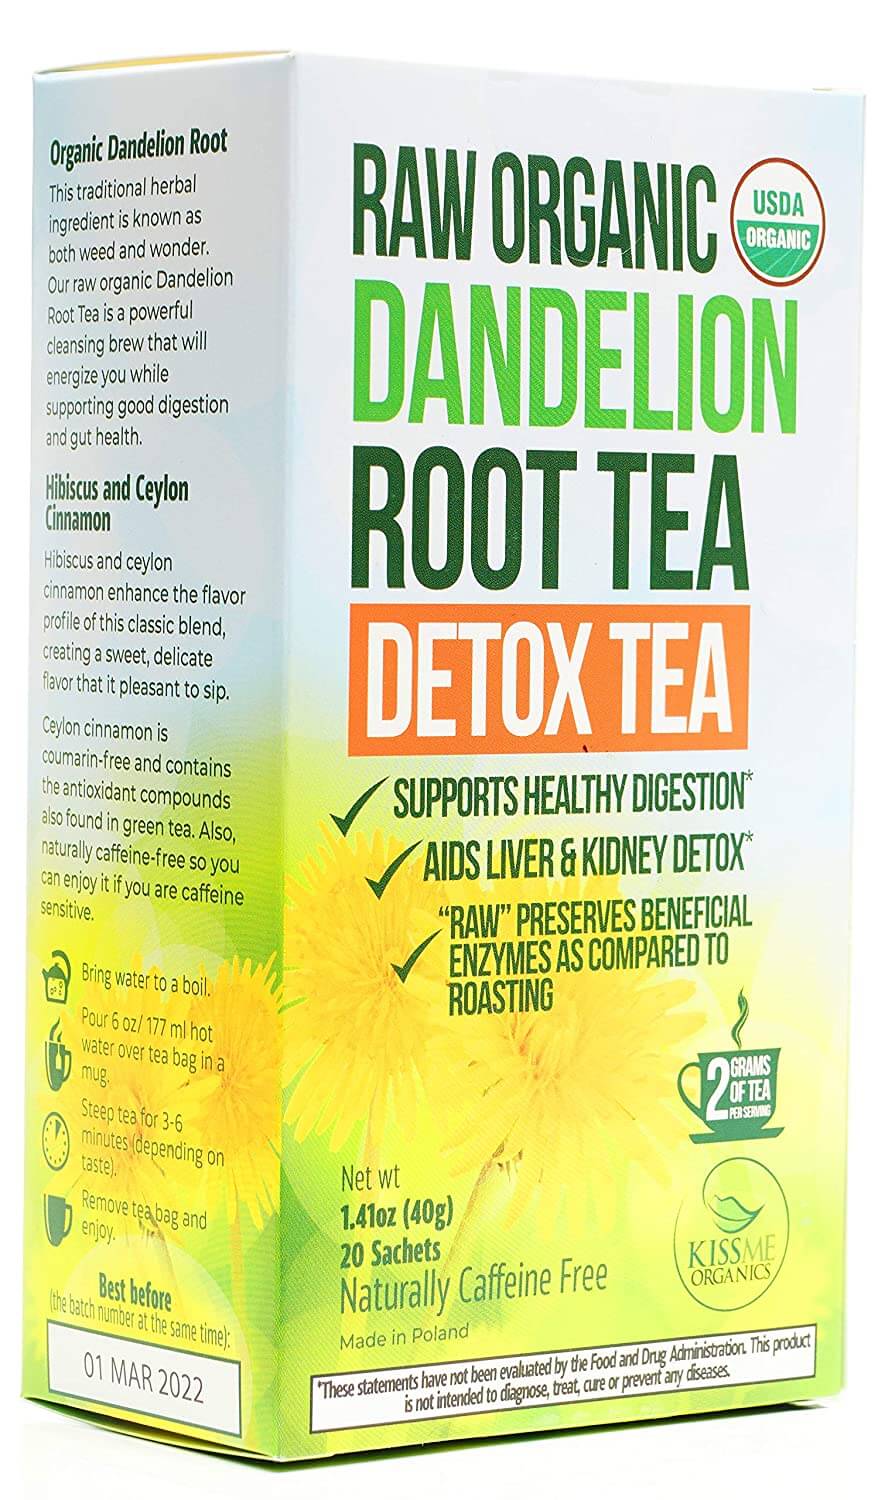 Kiss Me Organics Dandelion Detox Tea